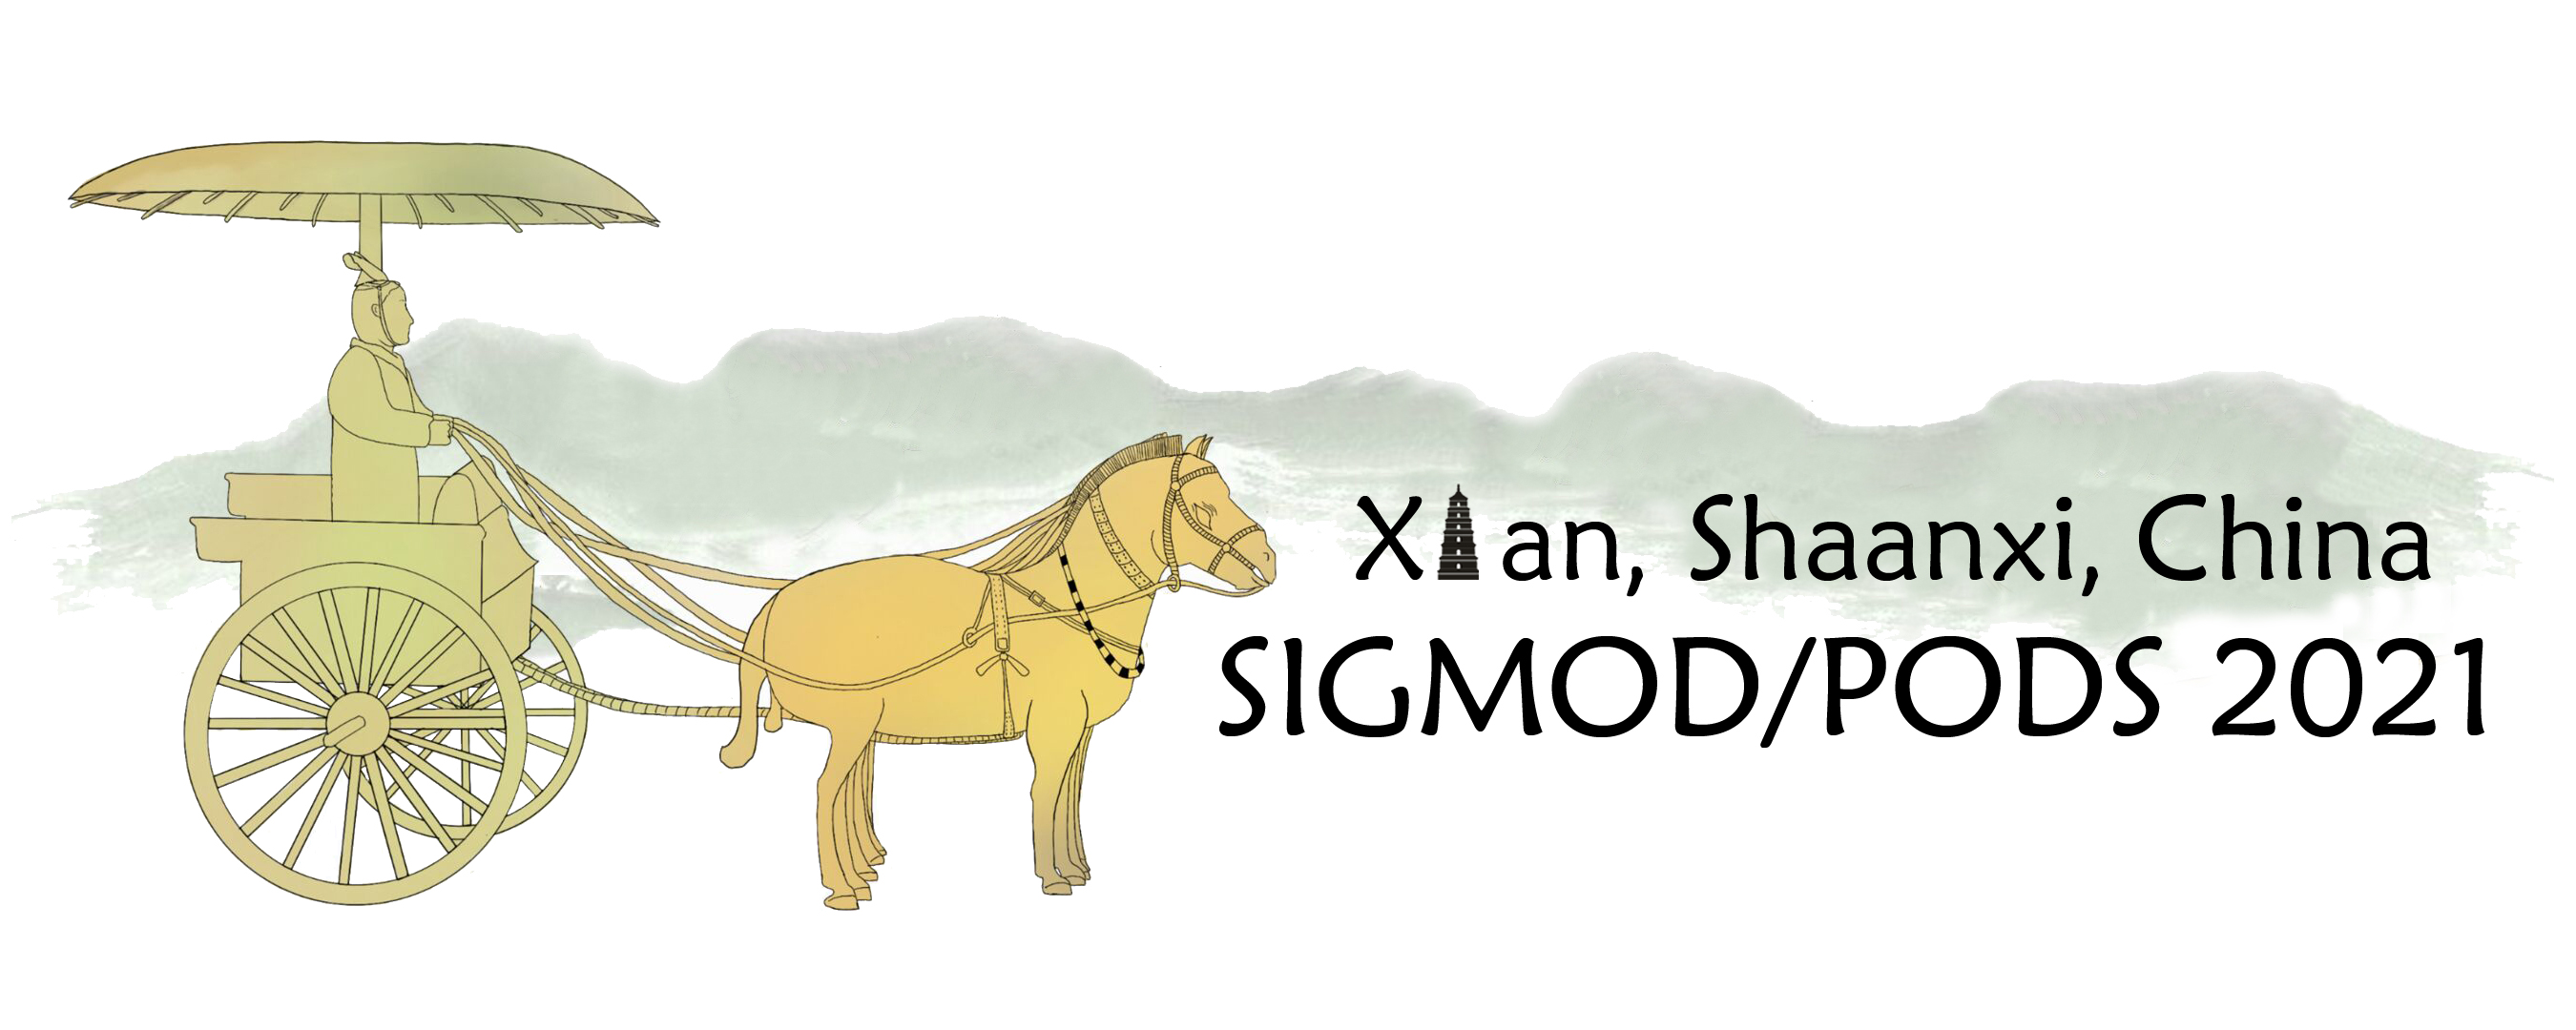 https://2021.sigmod.org/images/2021sigmod-logo1.jpg